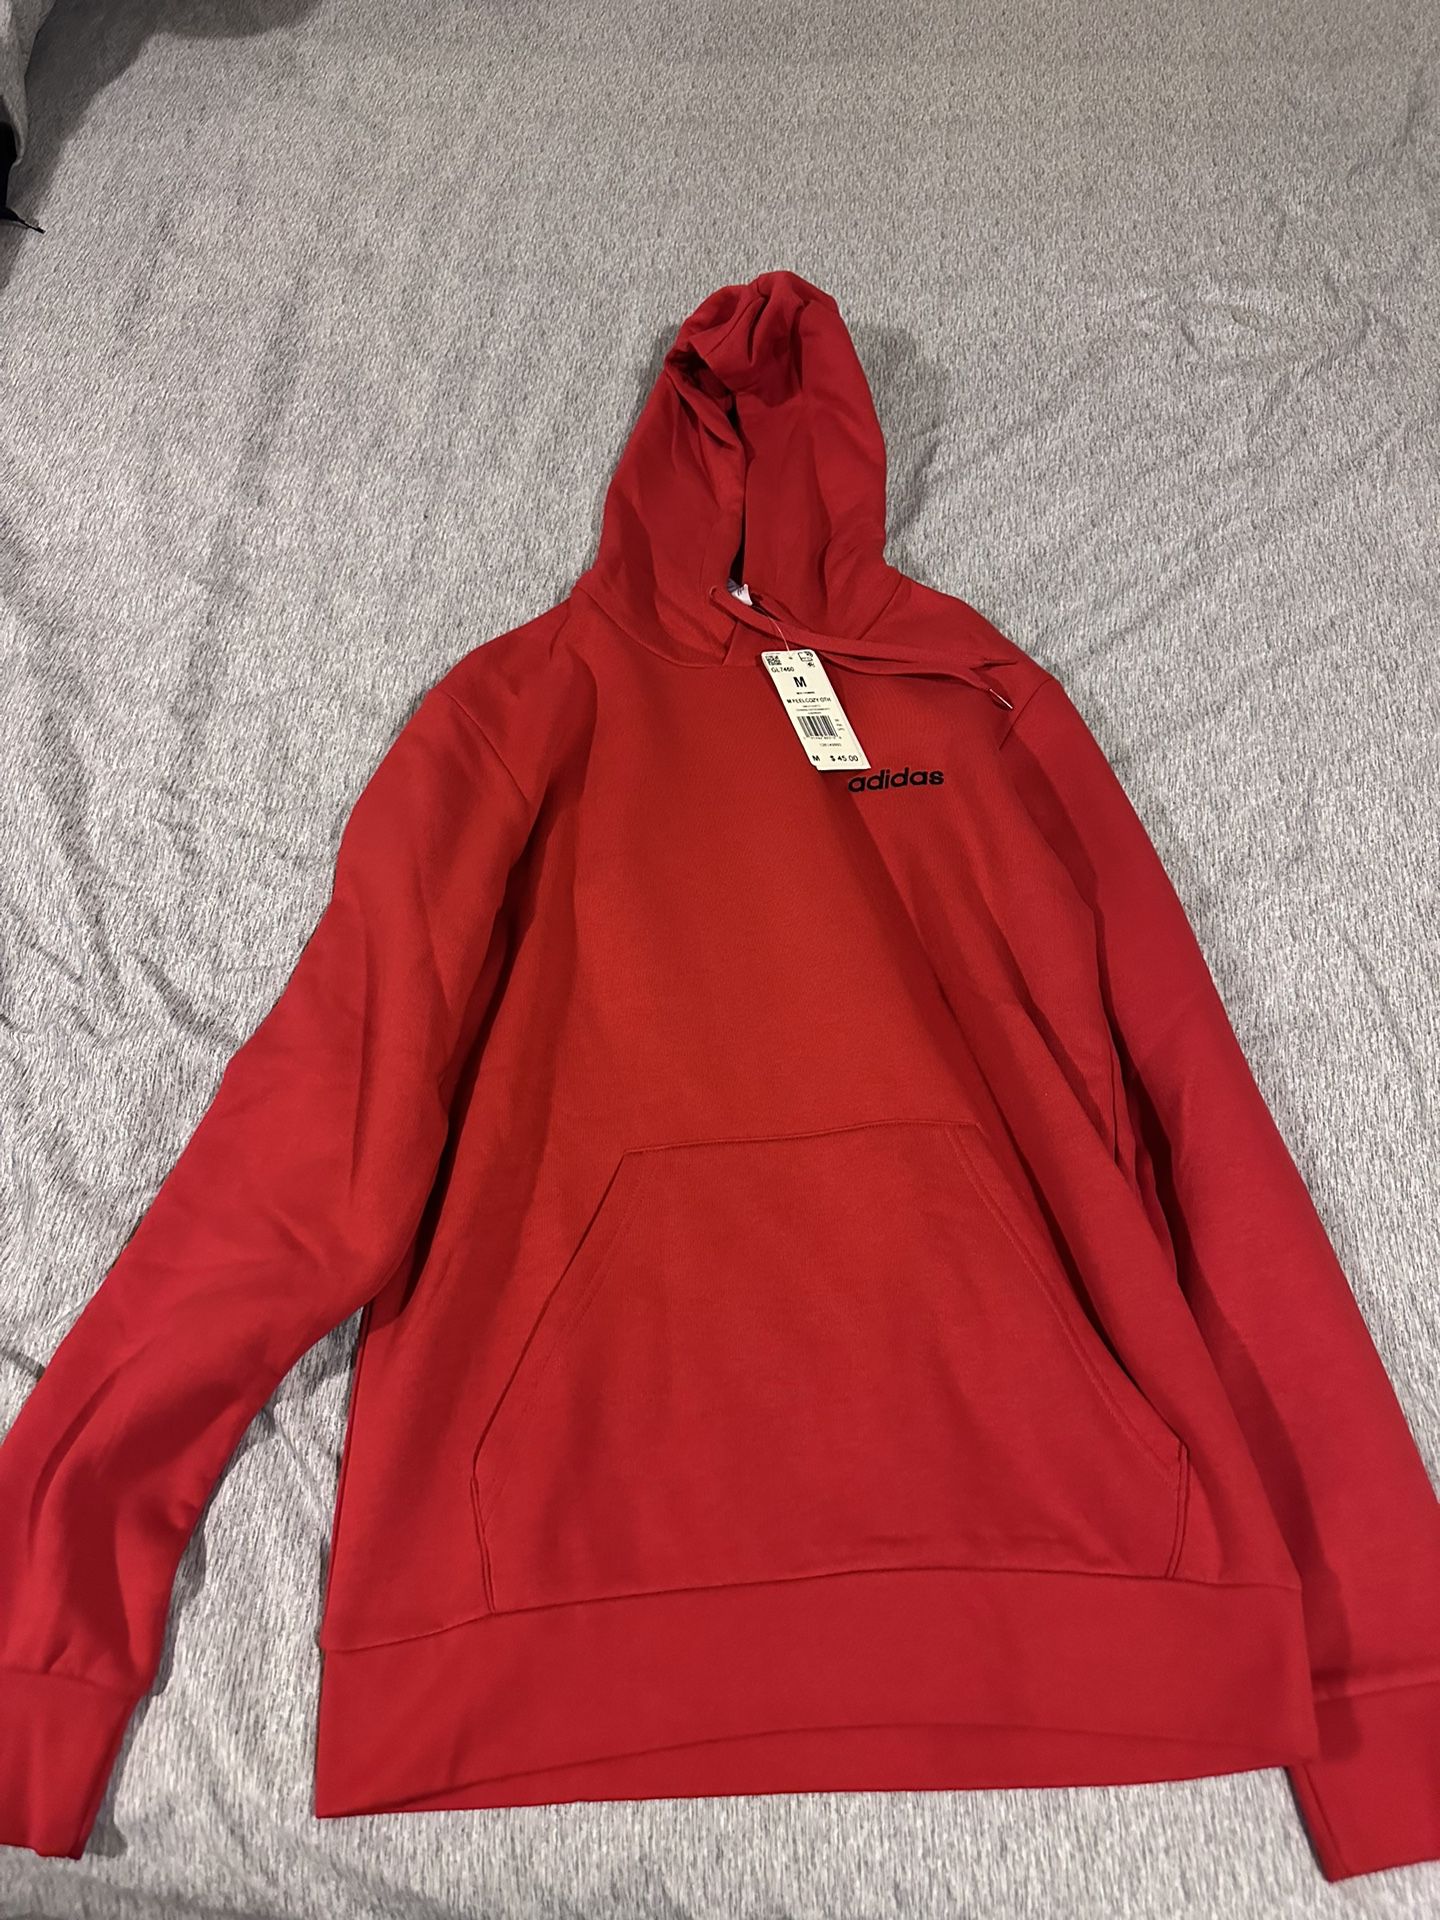 Adidas Size Small, Medium Sweaters Red, Grey, Dark Grey, And Burgundy 